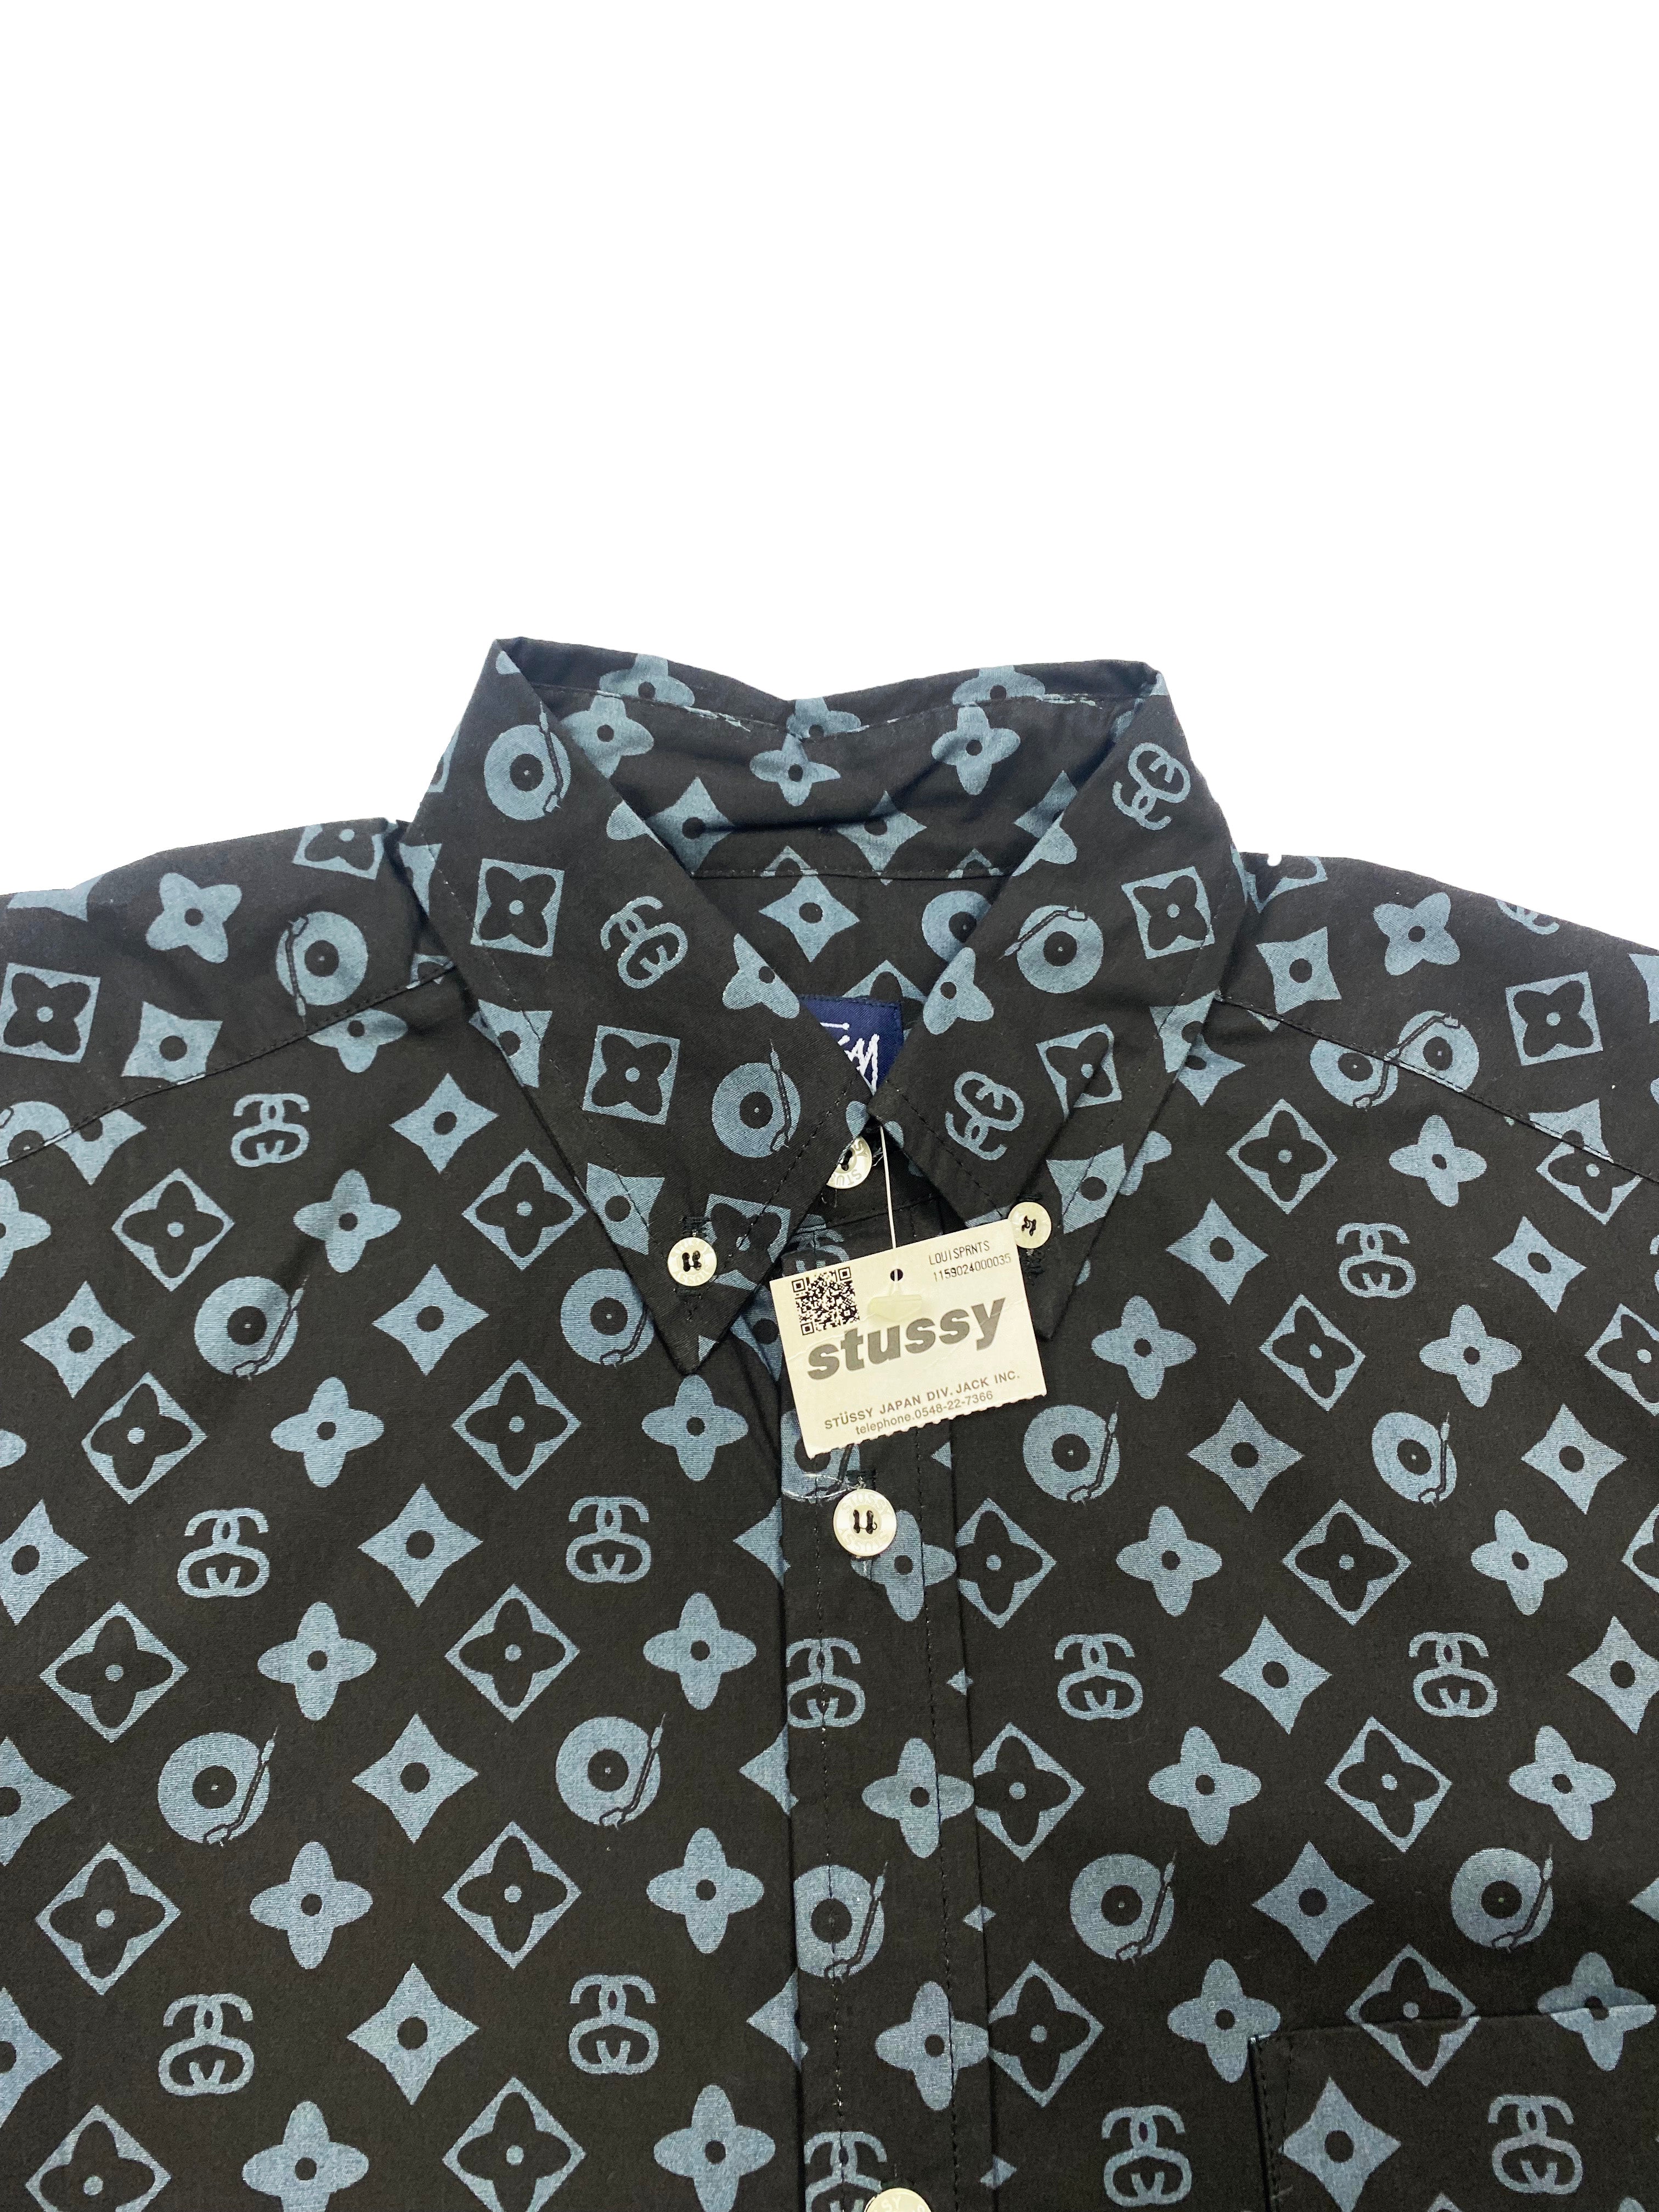 Stussy 'Louis Vuitton' Black & Grey Short Sleeve Shirt BNWT 00's Size Small